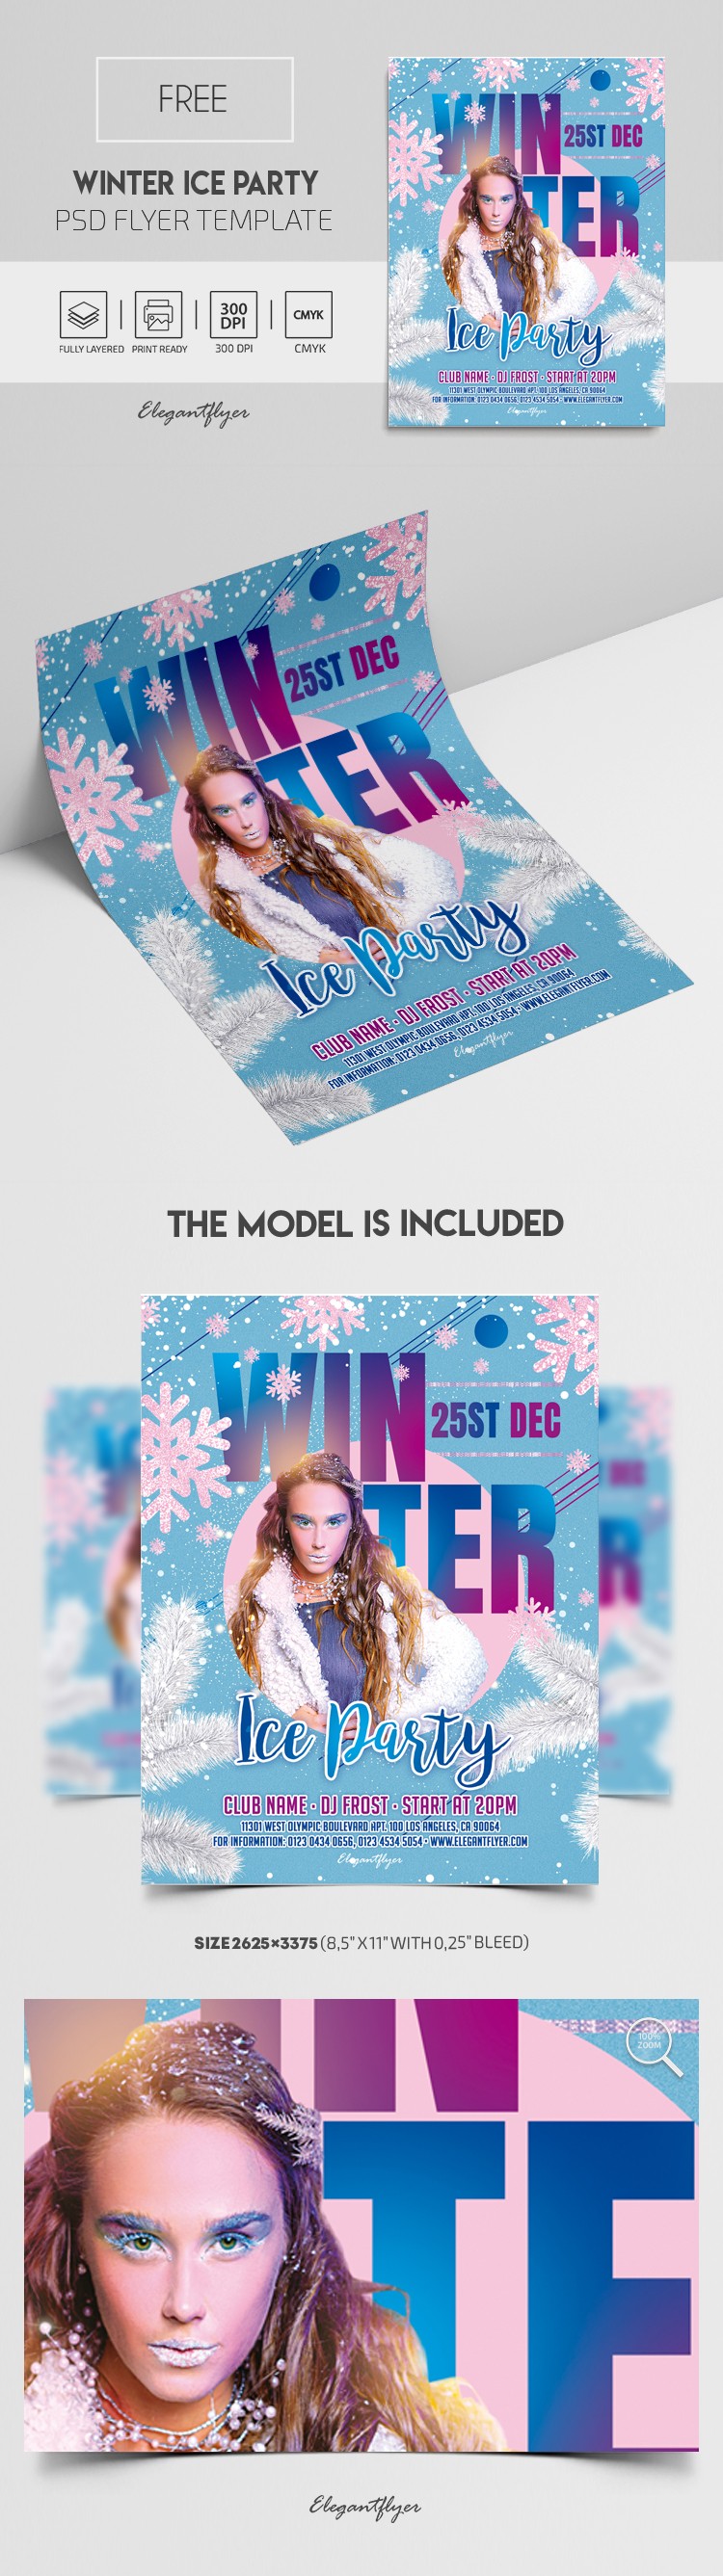 Winter Ice Party Flyer by ElegantFlyer